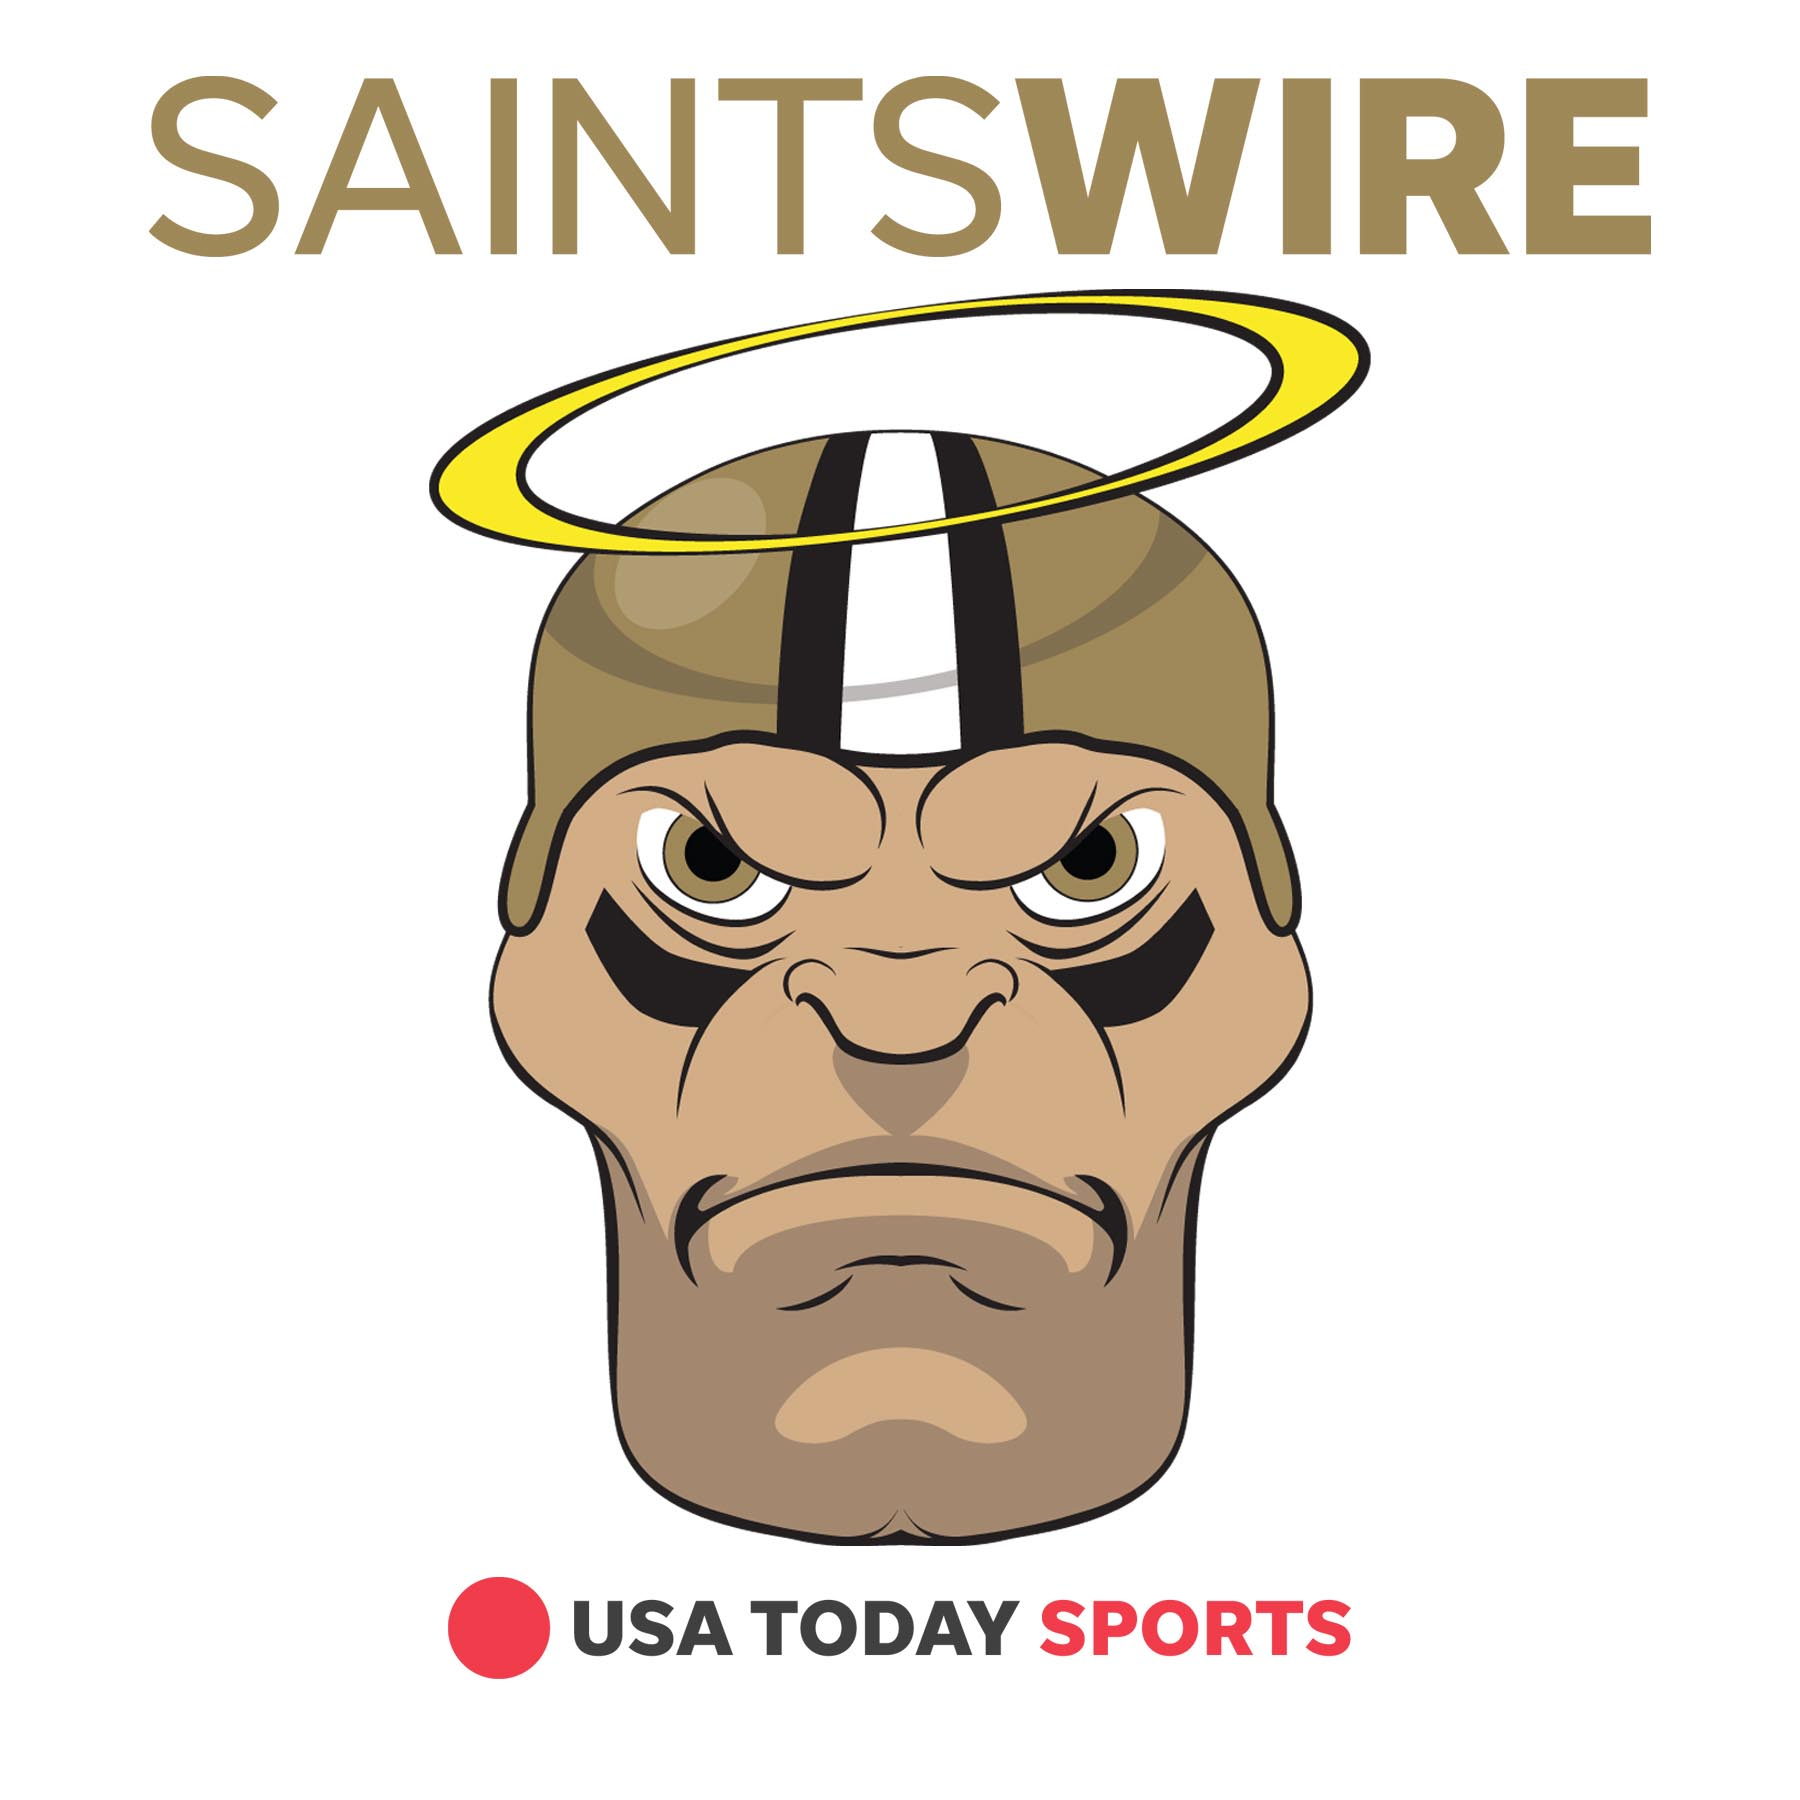 Derek Carr’s shoulder injury // Alvin Kamara’s return // Saints-Bucs preview with predictions